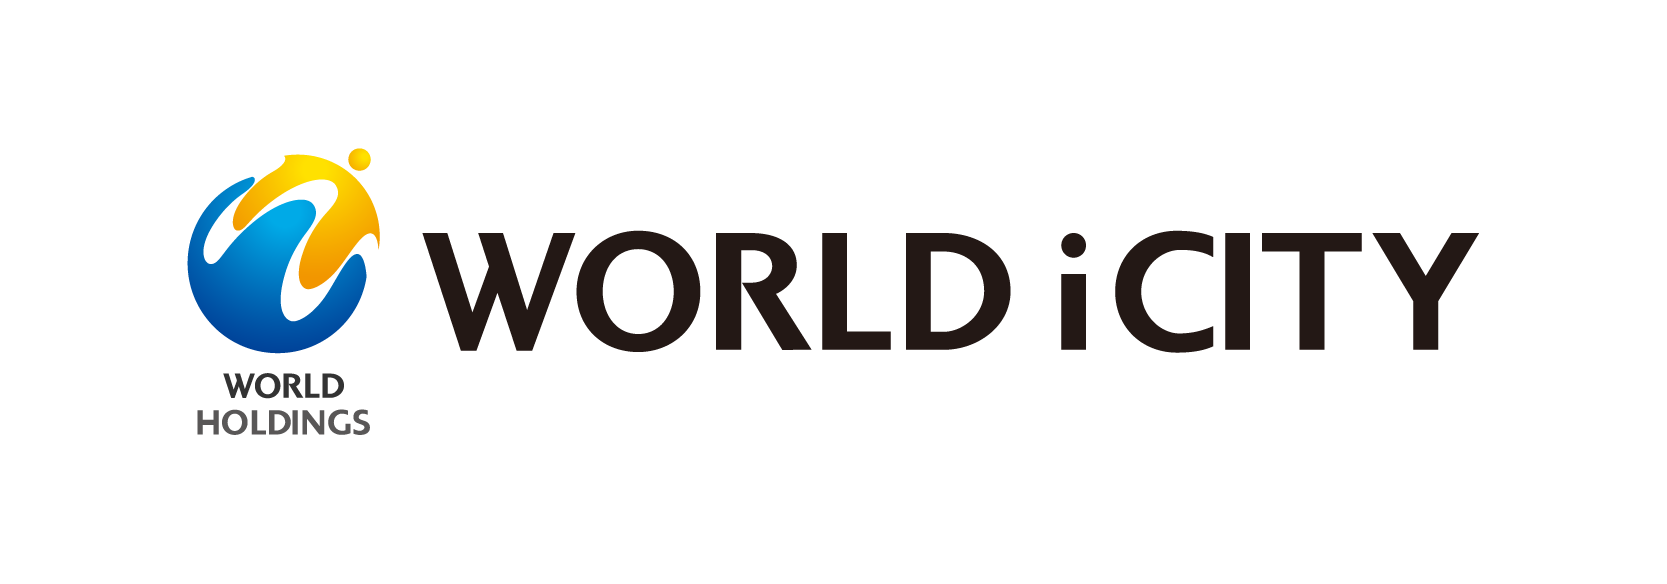 WORLD ICITY CO., LTD.